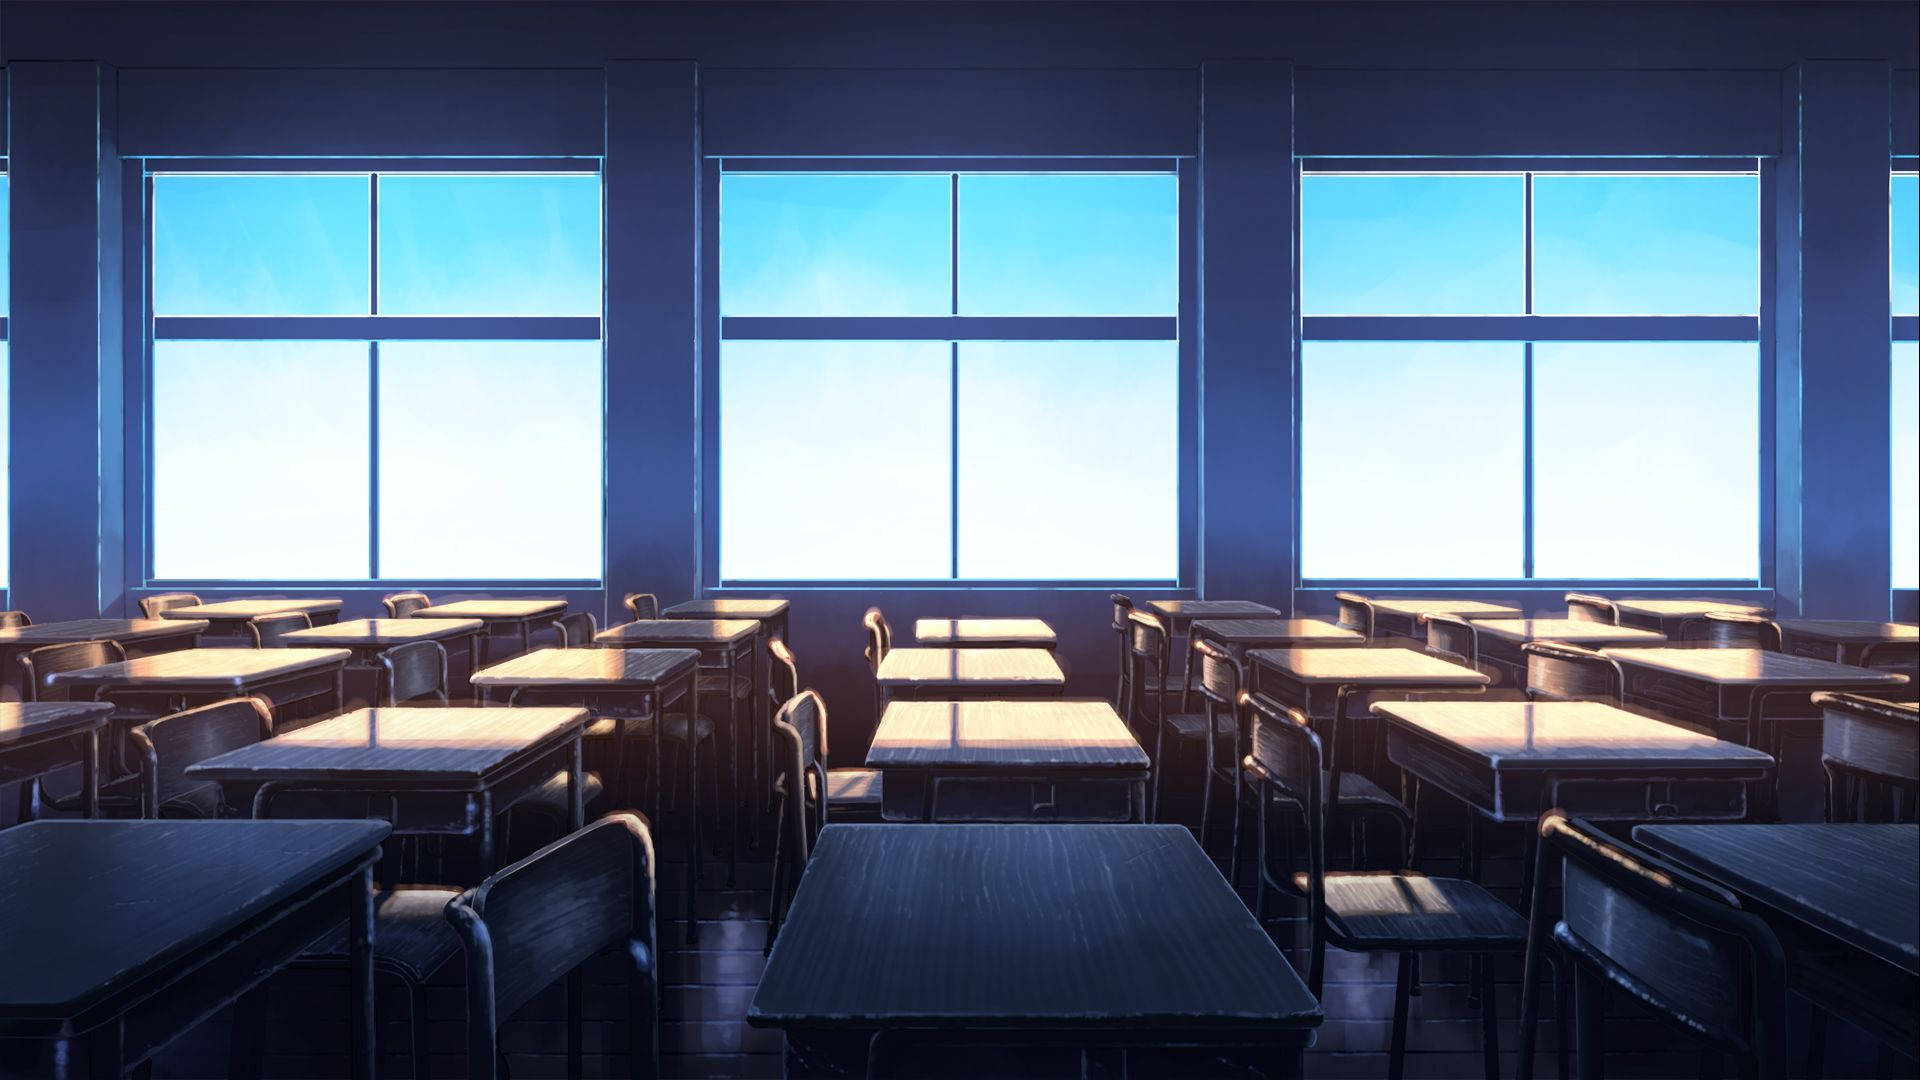 Dark Classroom With Bright Windows Background